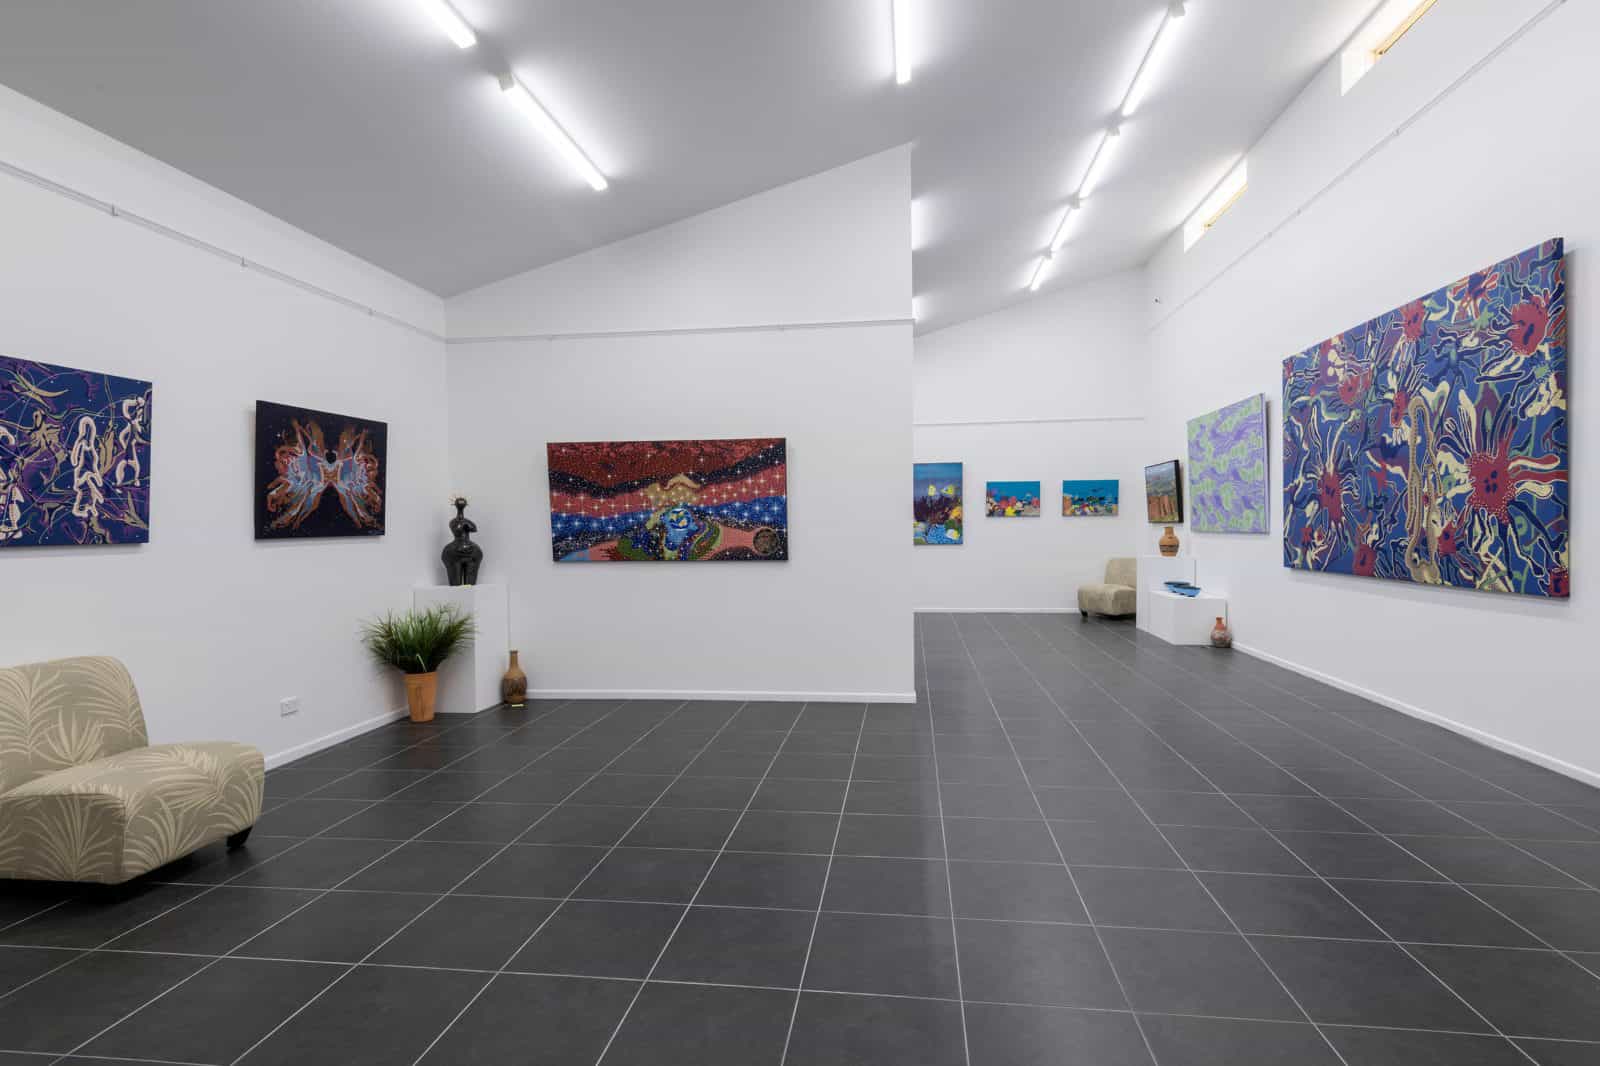 Gawura Gallery exhibits Aboriginal Art and Fine Arts